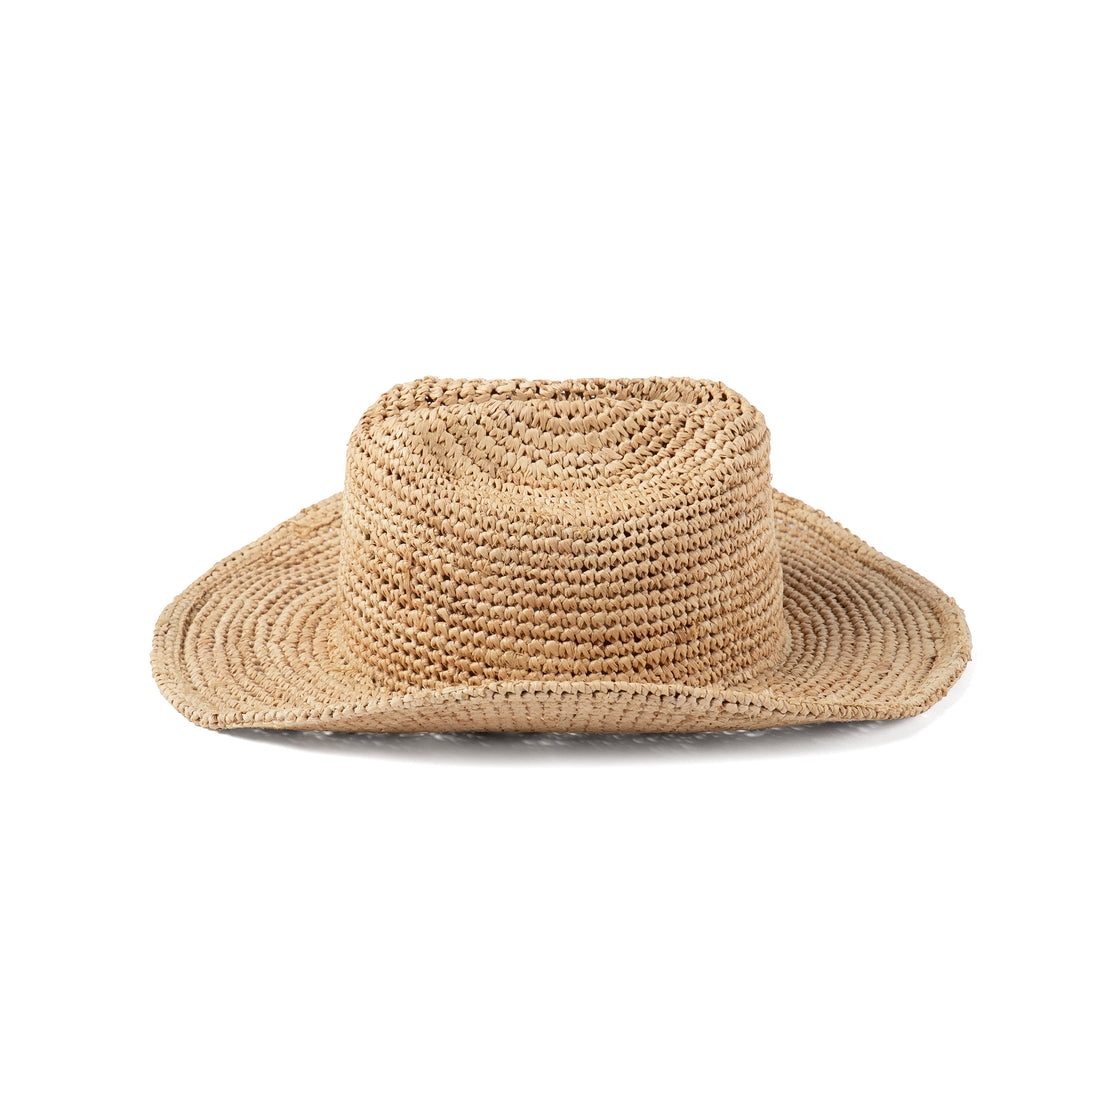 Raffia Cowboy - Straw Cowboy Hat in Natural | Lack of Color US